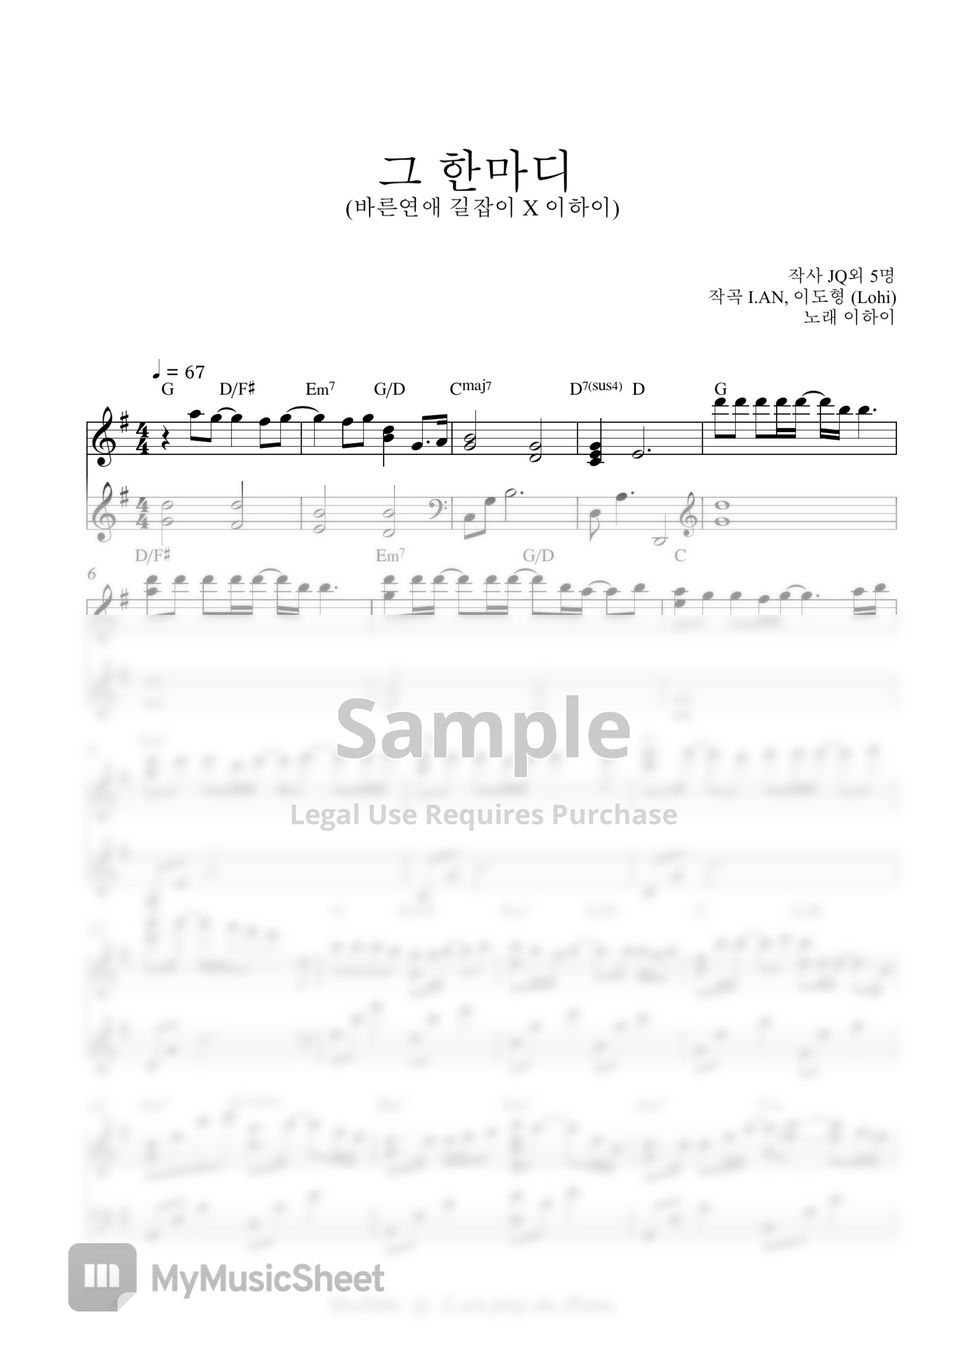 LEE HI(이하이) - 그 한마디(Dear You)((바른연애 길잡이X이하이)(Romance 101 X LEE HI) (Easy Version) by I can play the Piano